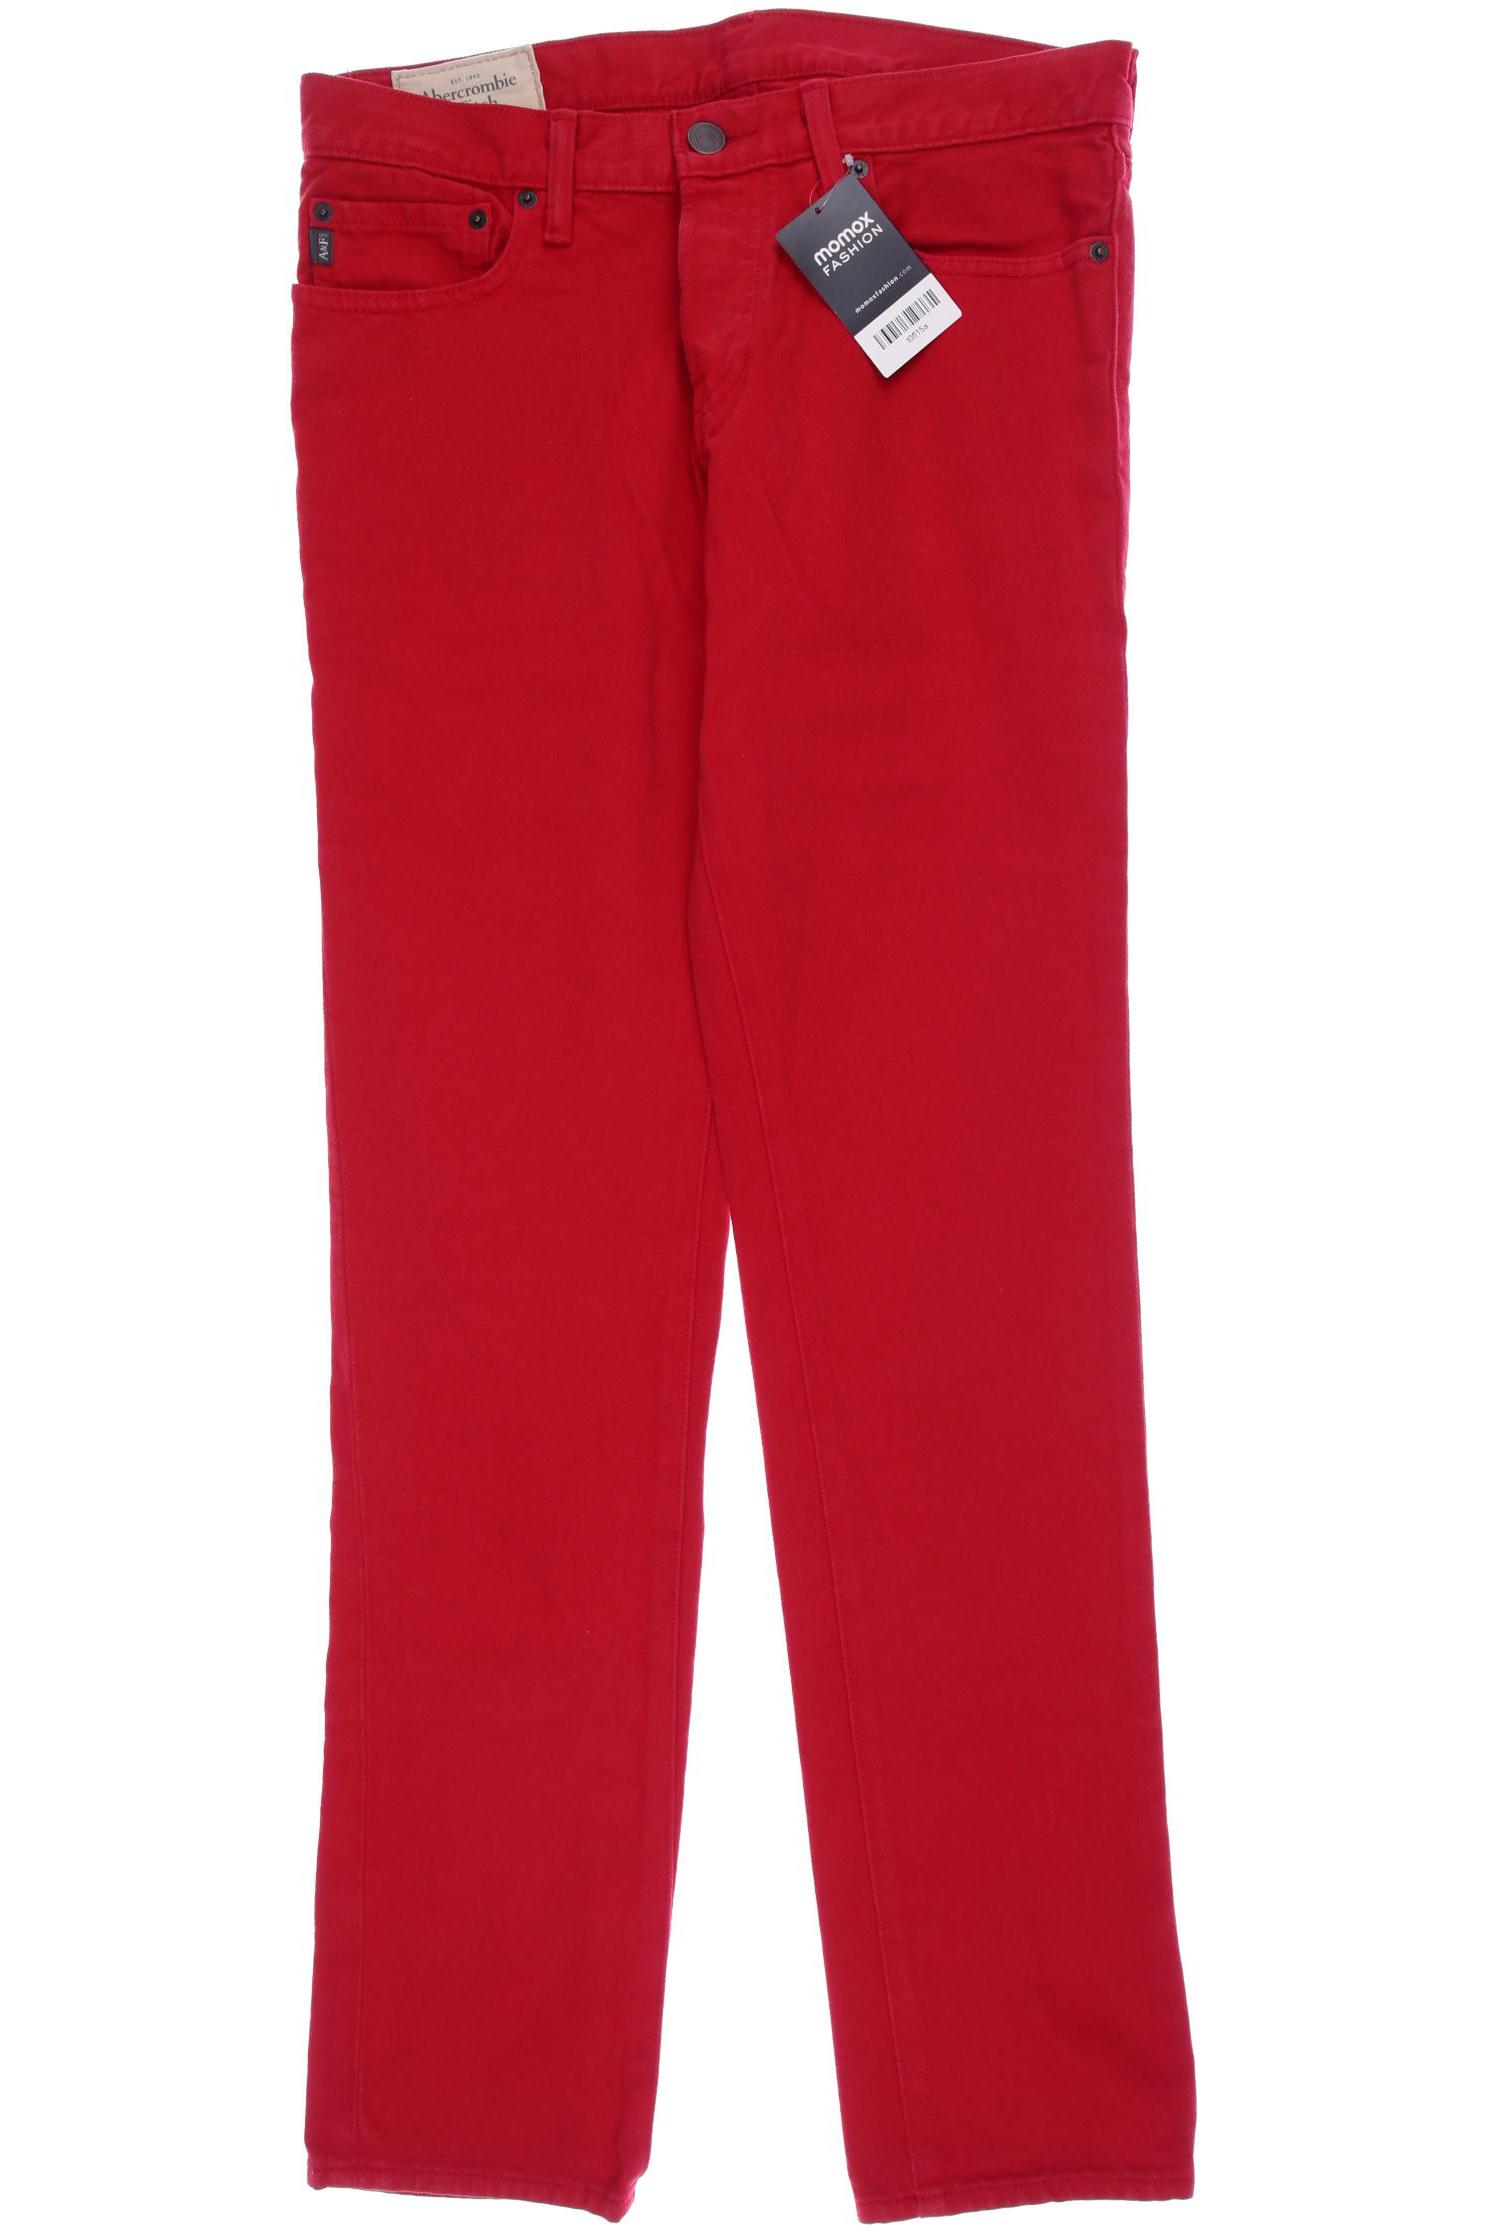 Abercrombie & Fitch Herren Jeans, rot von Abercrombie & Fitch